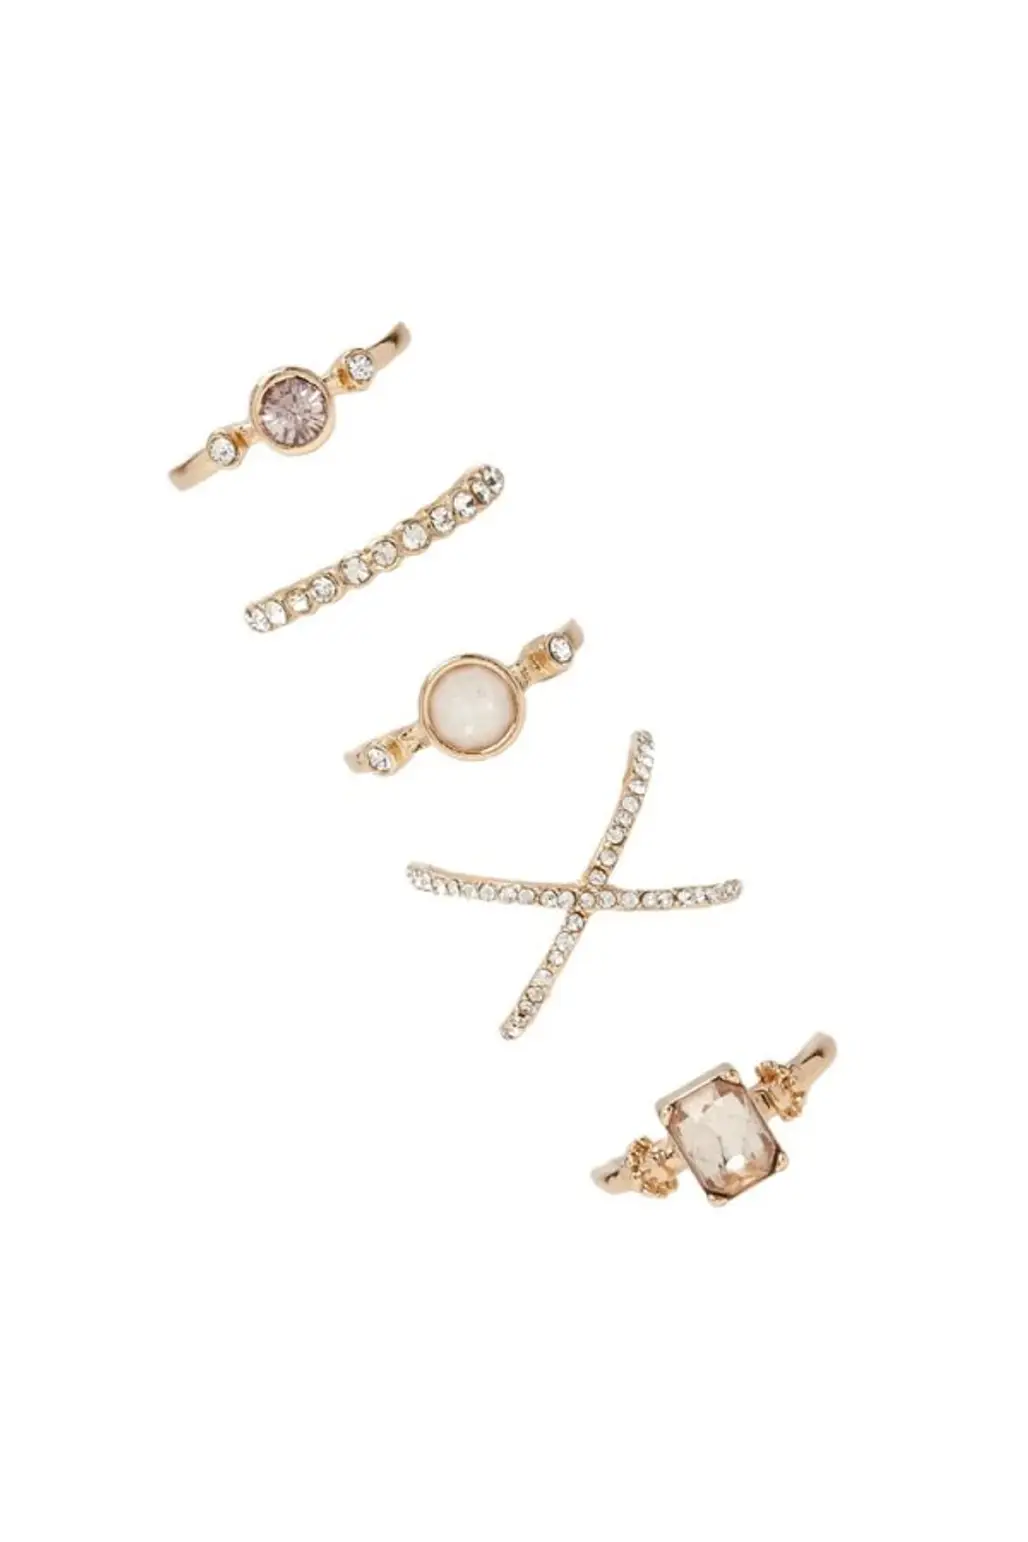 jewellery, fashion accessory, earrings, body jewelry, chain,